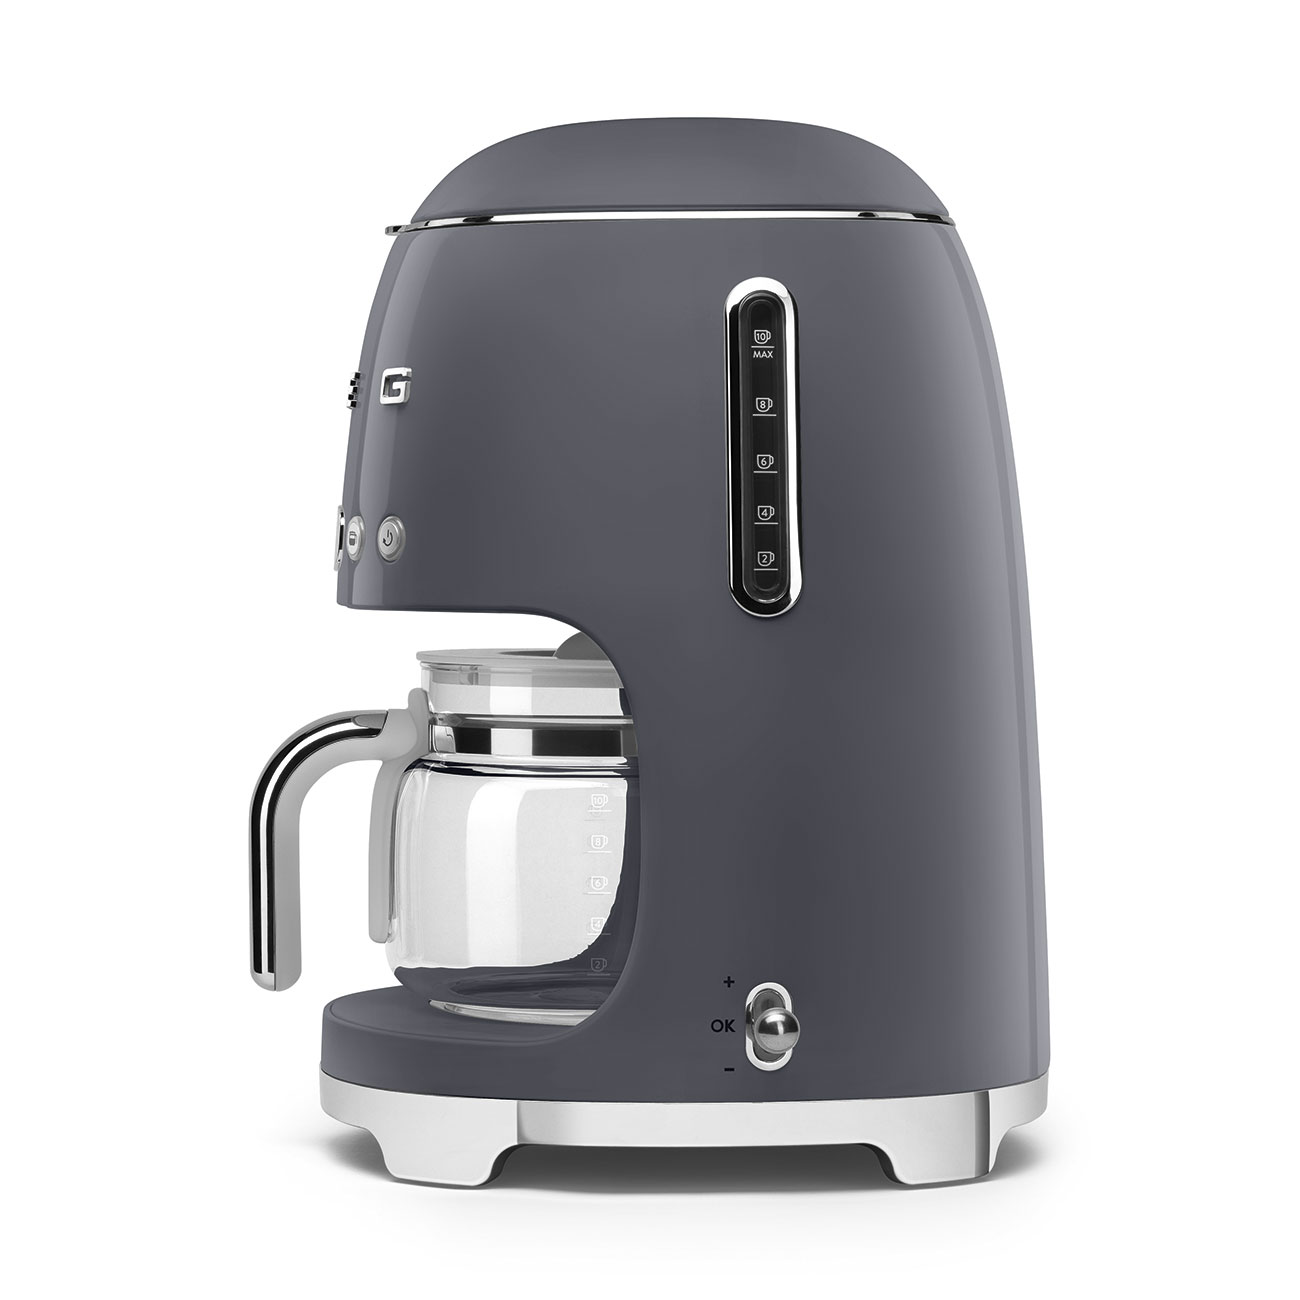 Slate Grey Drip Filter Coffee Machine - DCF02GRUK - Smeg_2